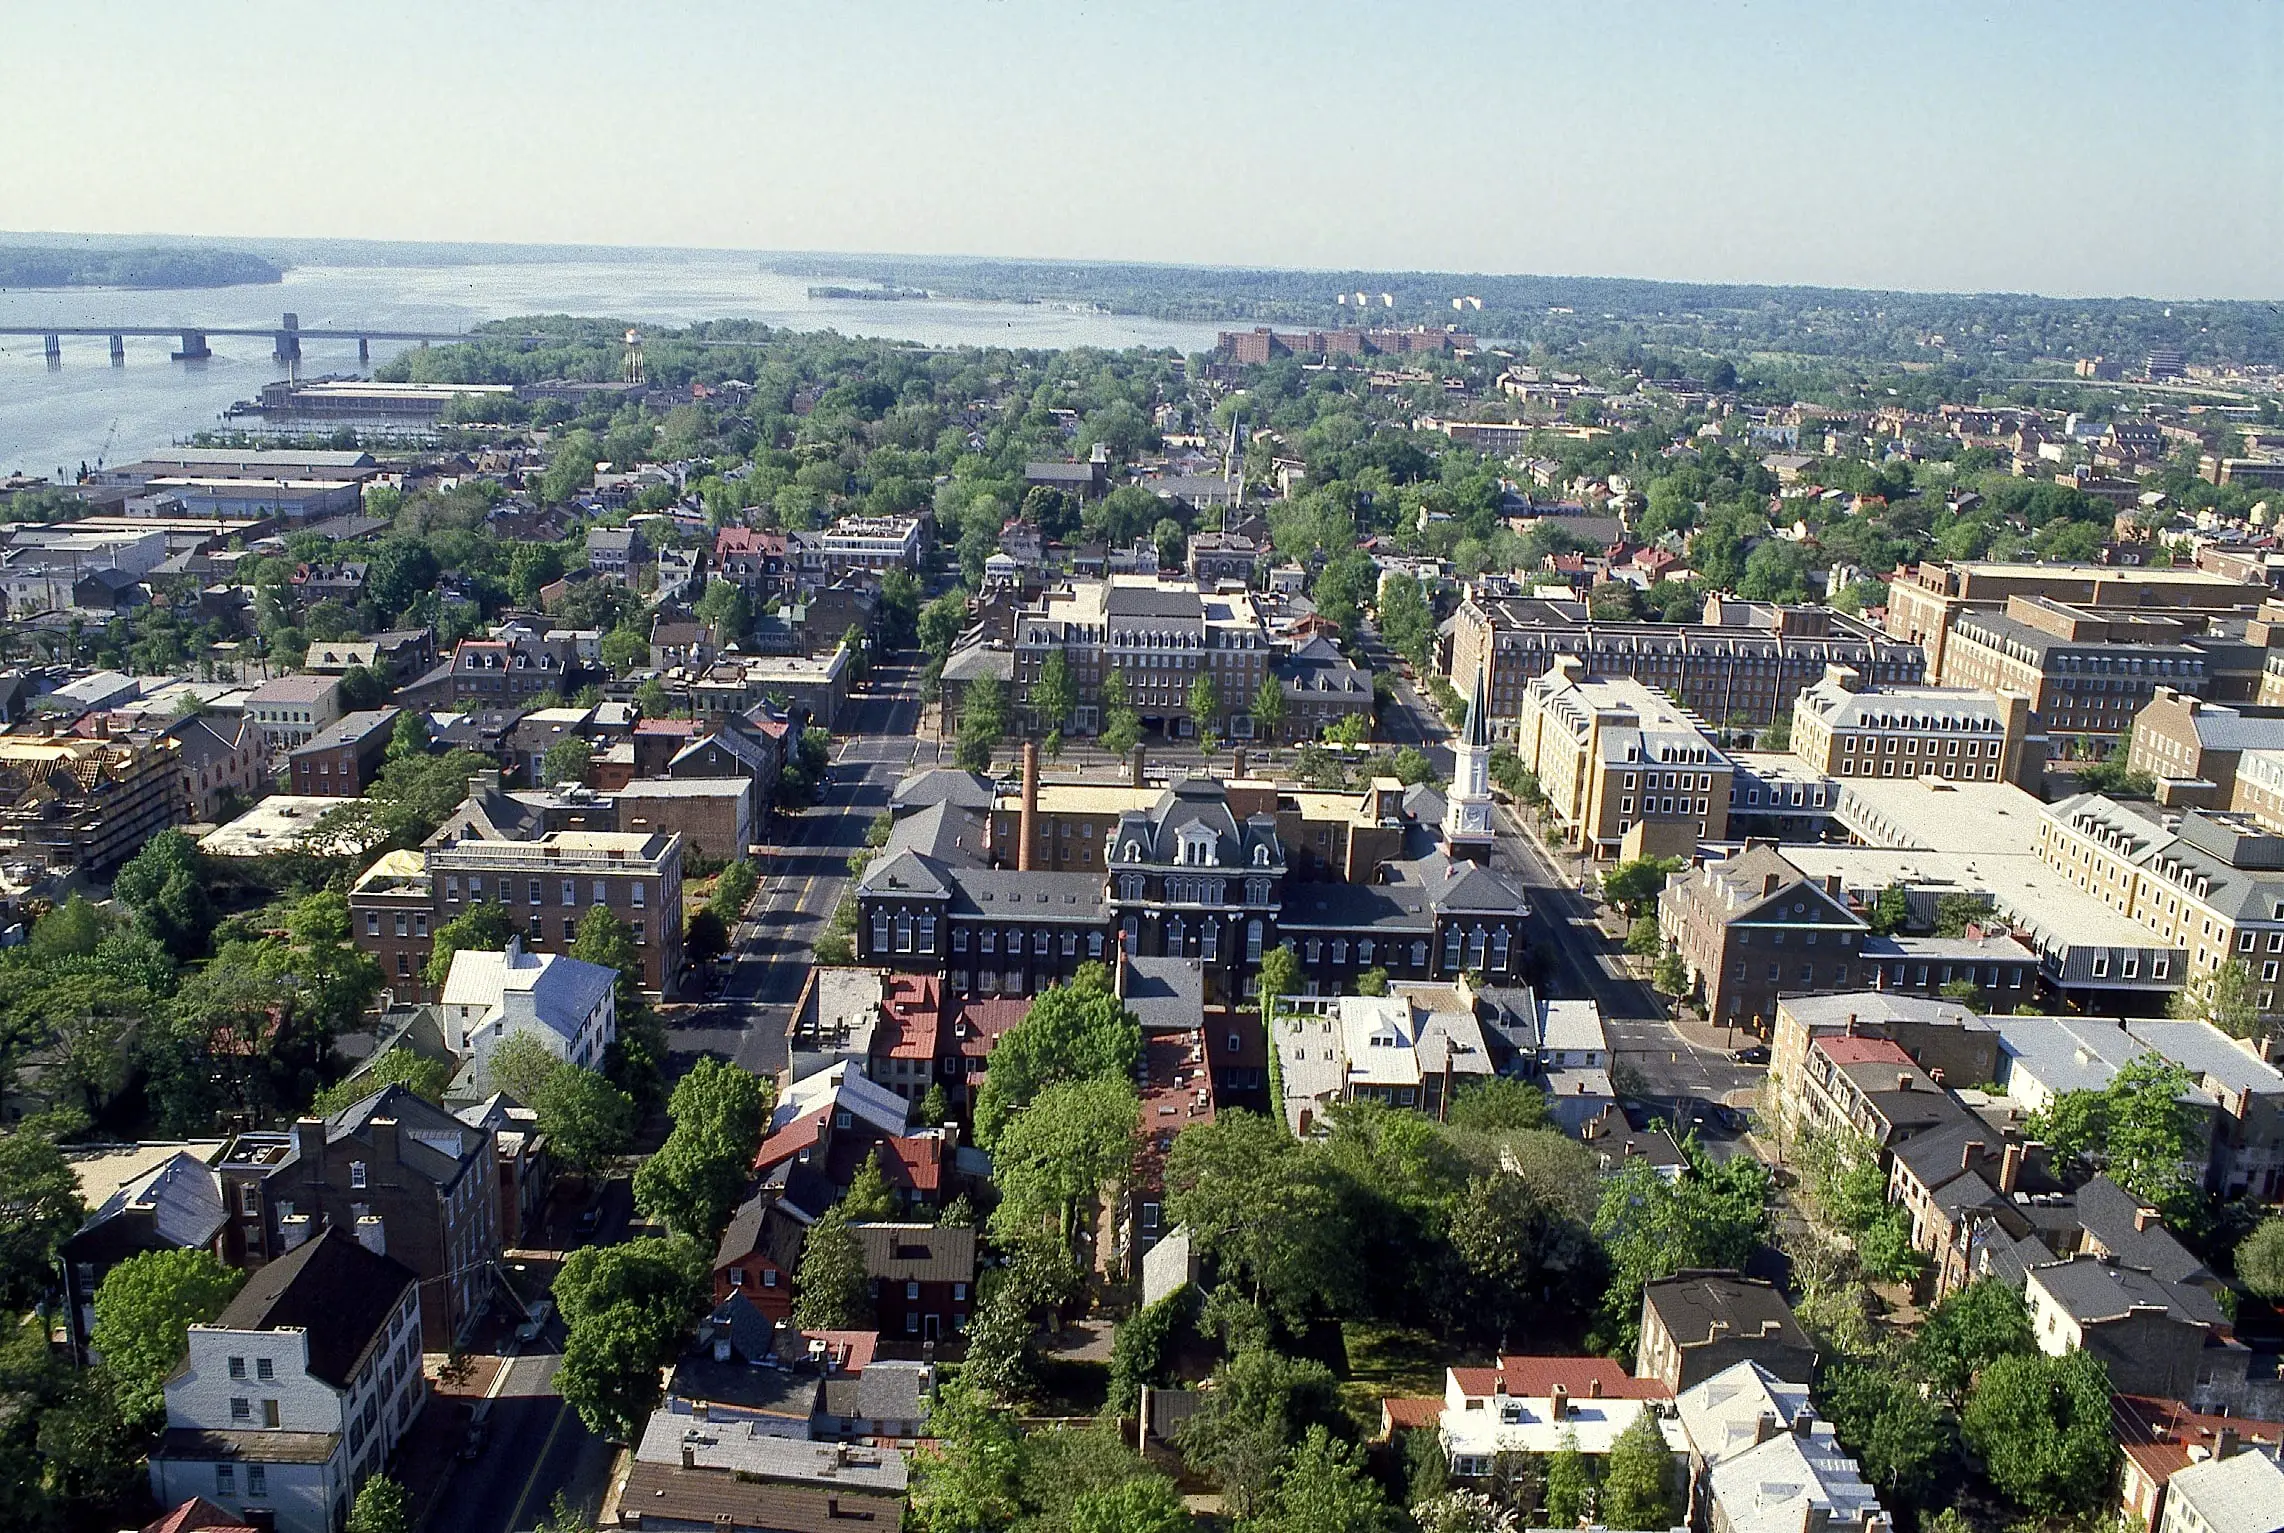 Aerial view of Alexandria, Virgina taken in the 1980s.